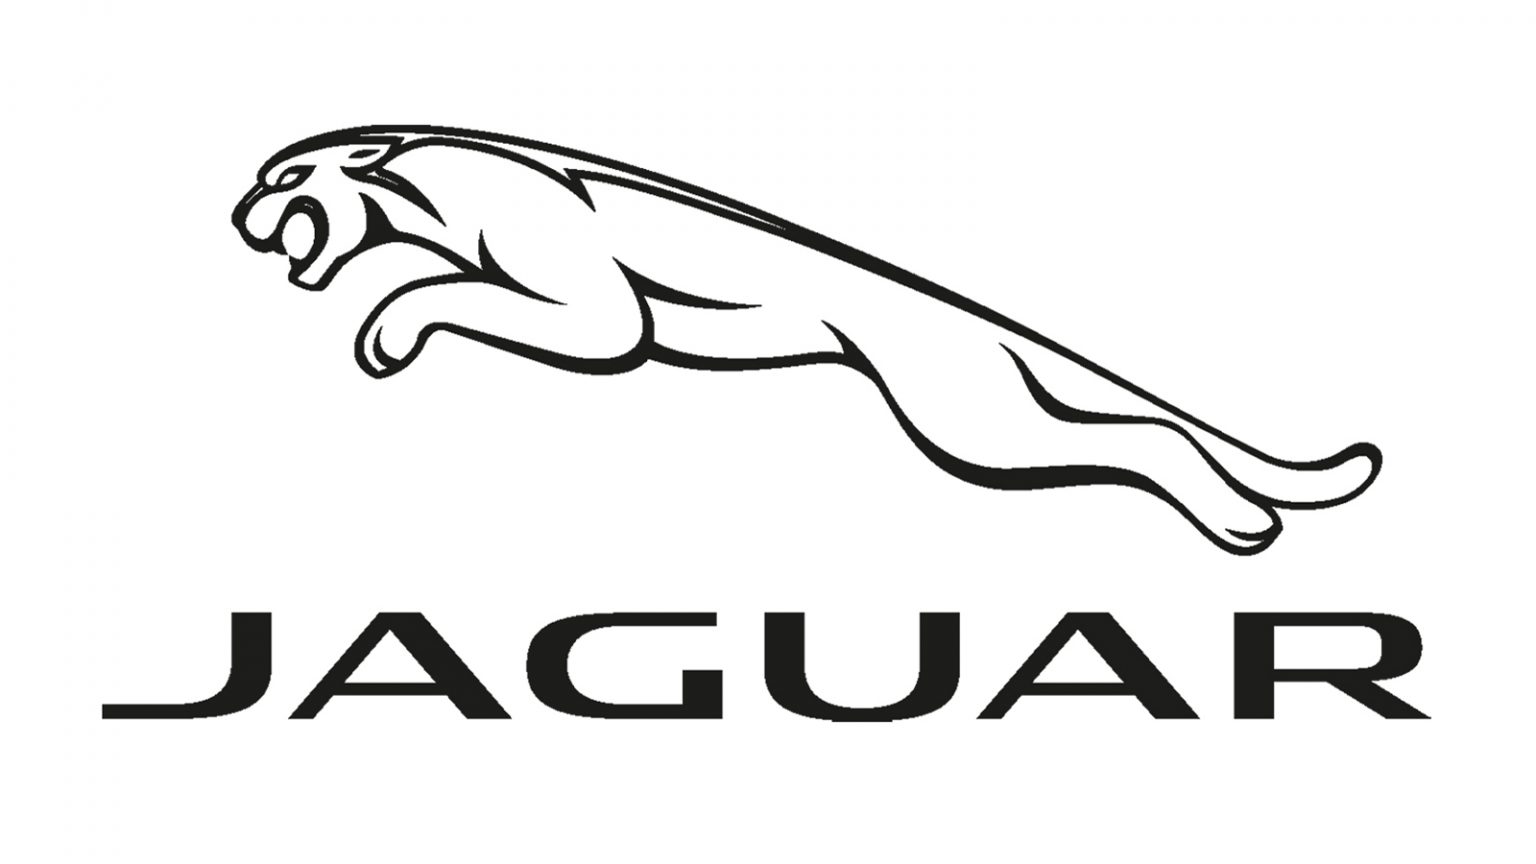 Jaguar Logo and Car Symbol Meaning